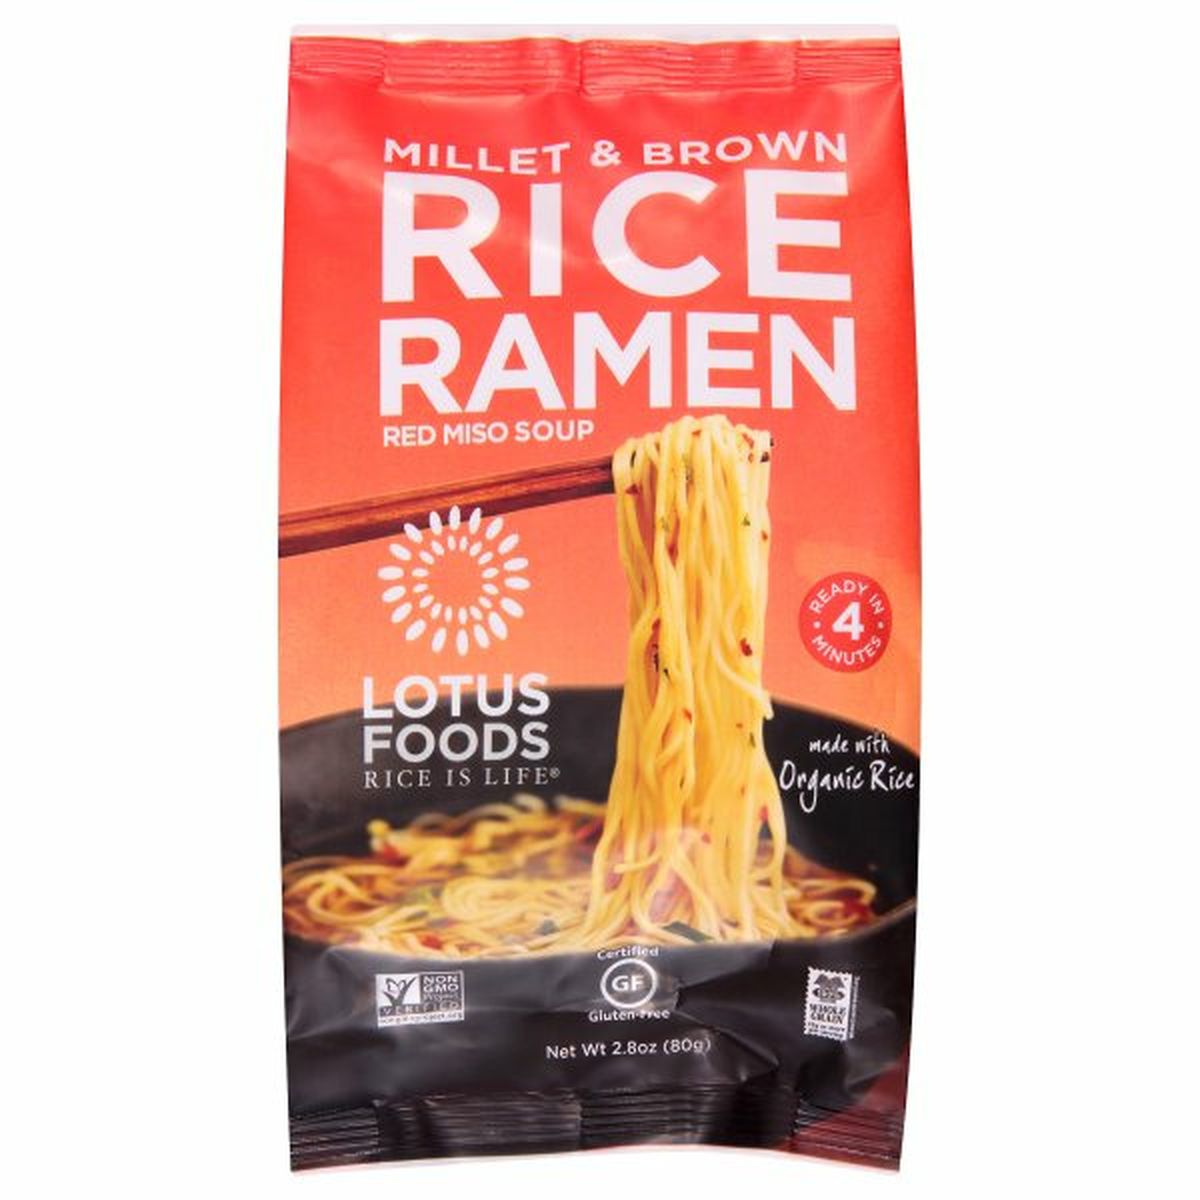 Calories in Lotus Foods Rice Ramen Red Miso Soup, Millet & Brown